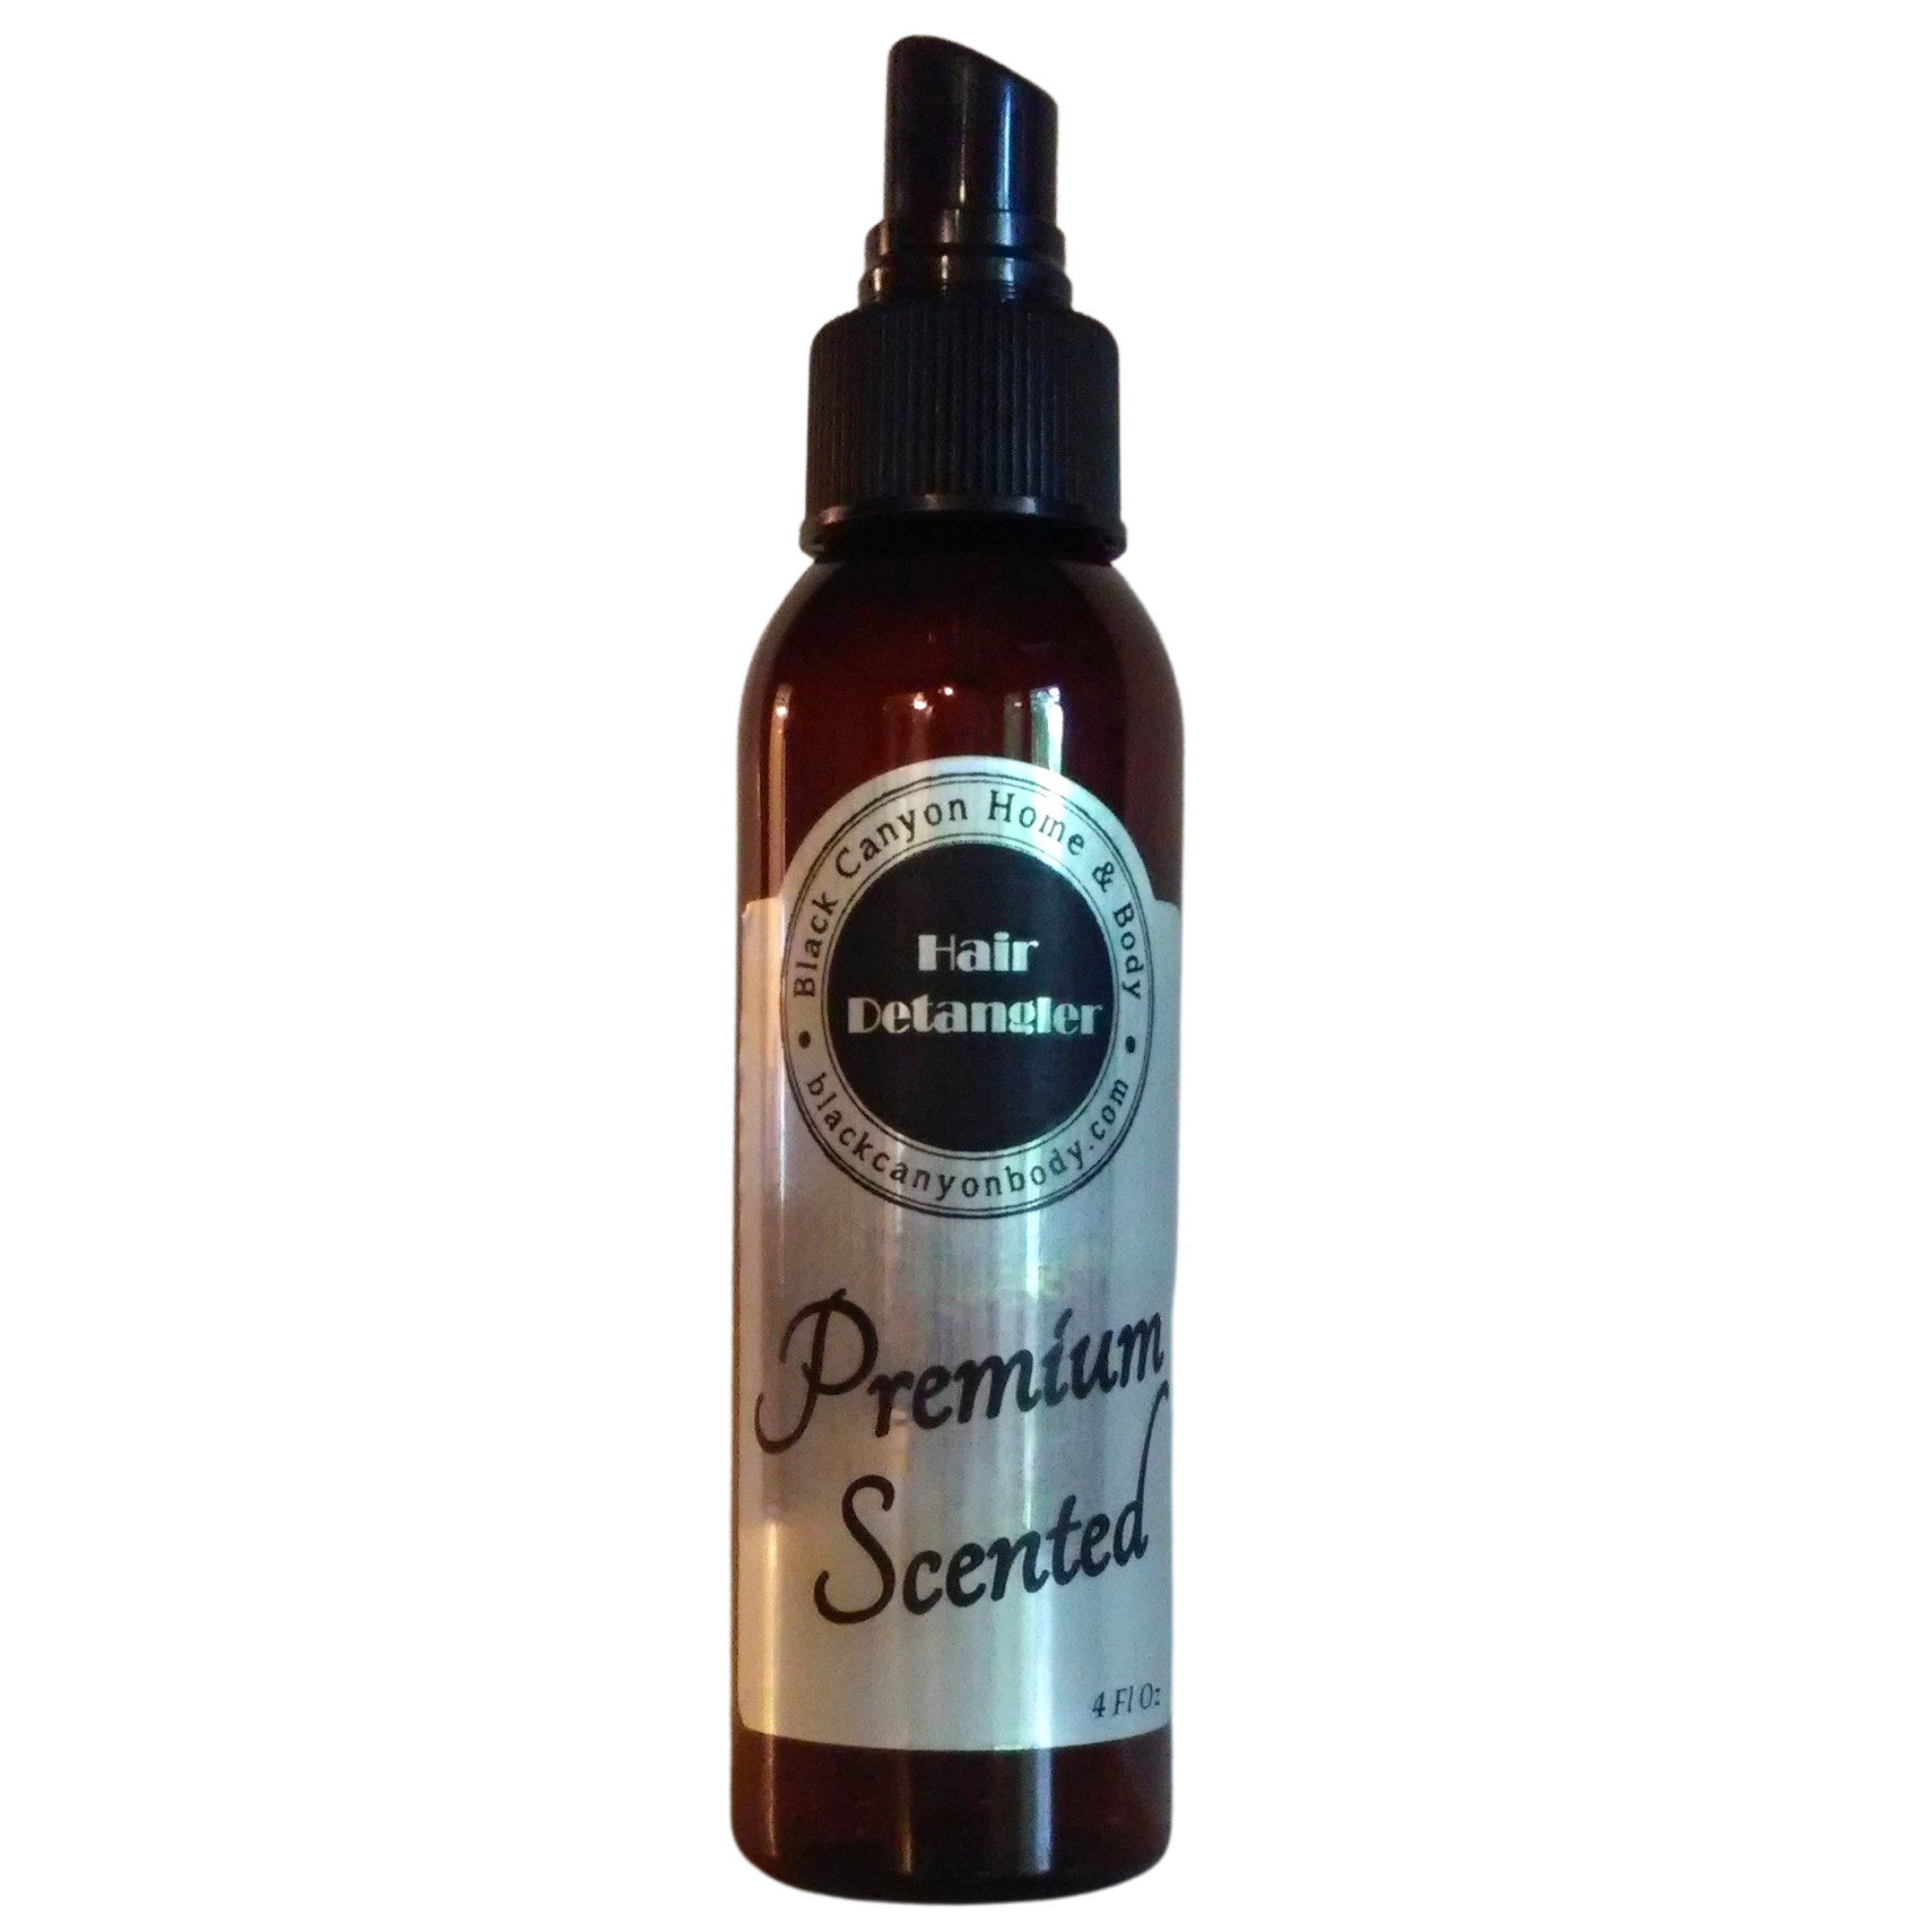 Paydens Cobalt Cedarwood Smoke Scented Hair Detangler Spray with Olive Oil For Men